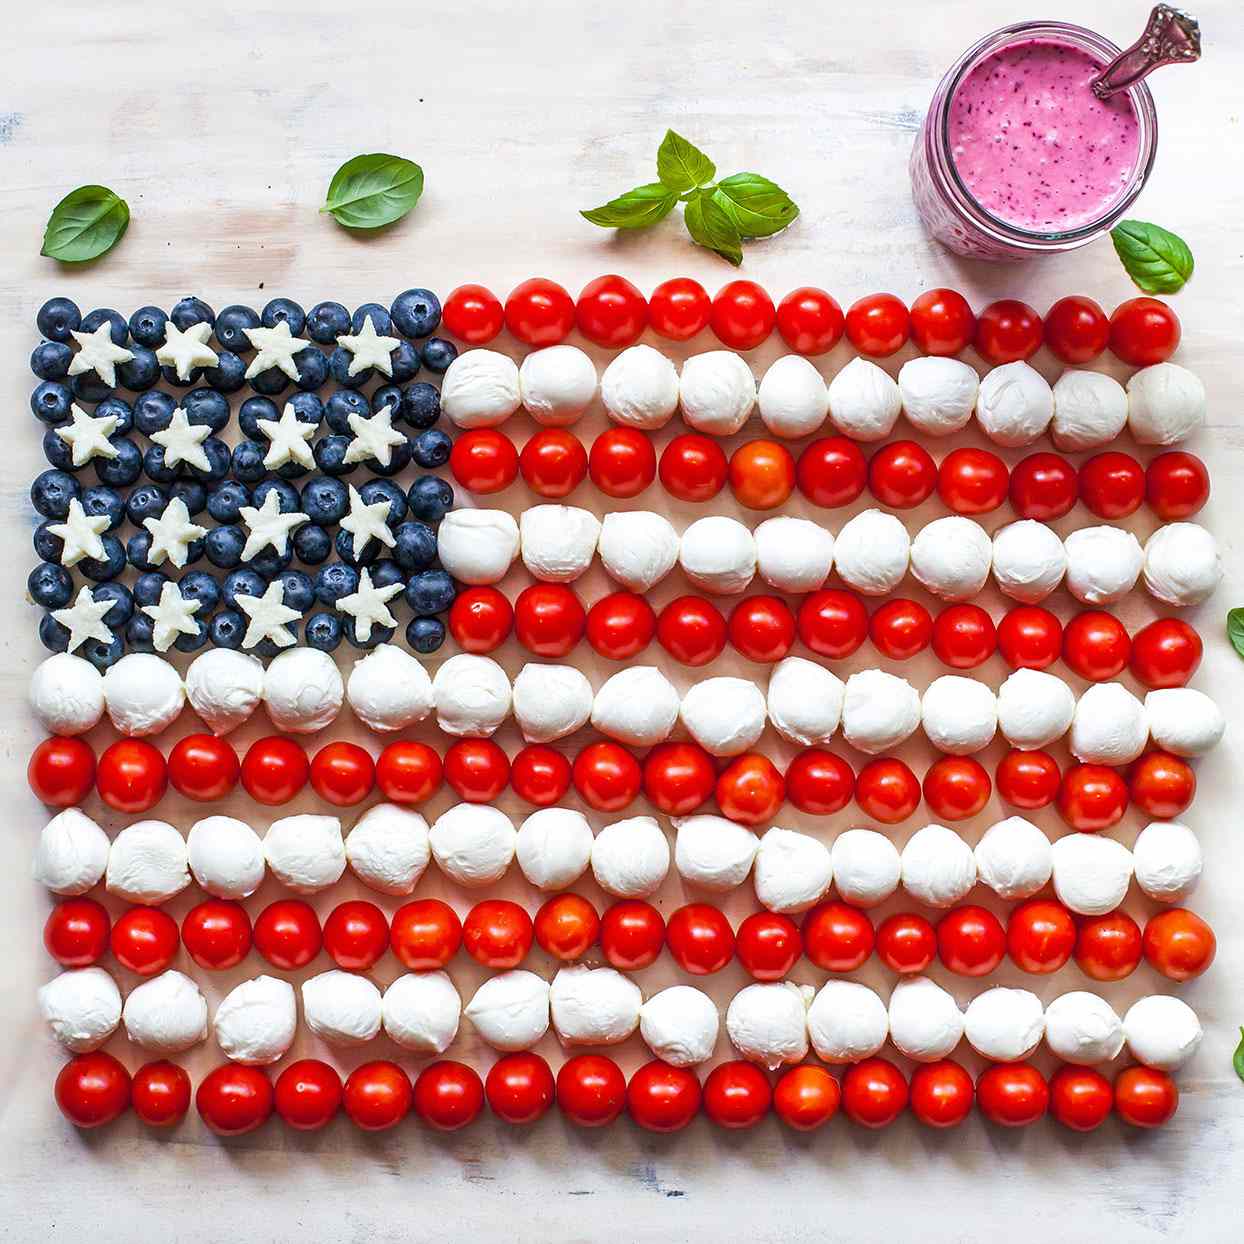 American Flag Caprese Salad with Blueberry-Balsamic Vinaigrette